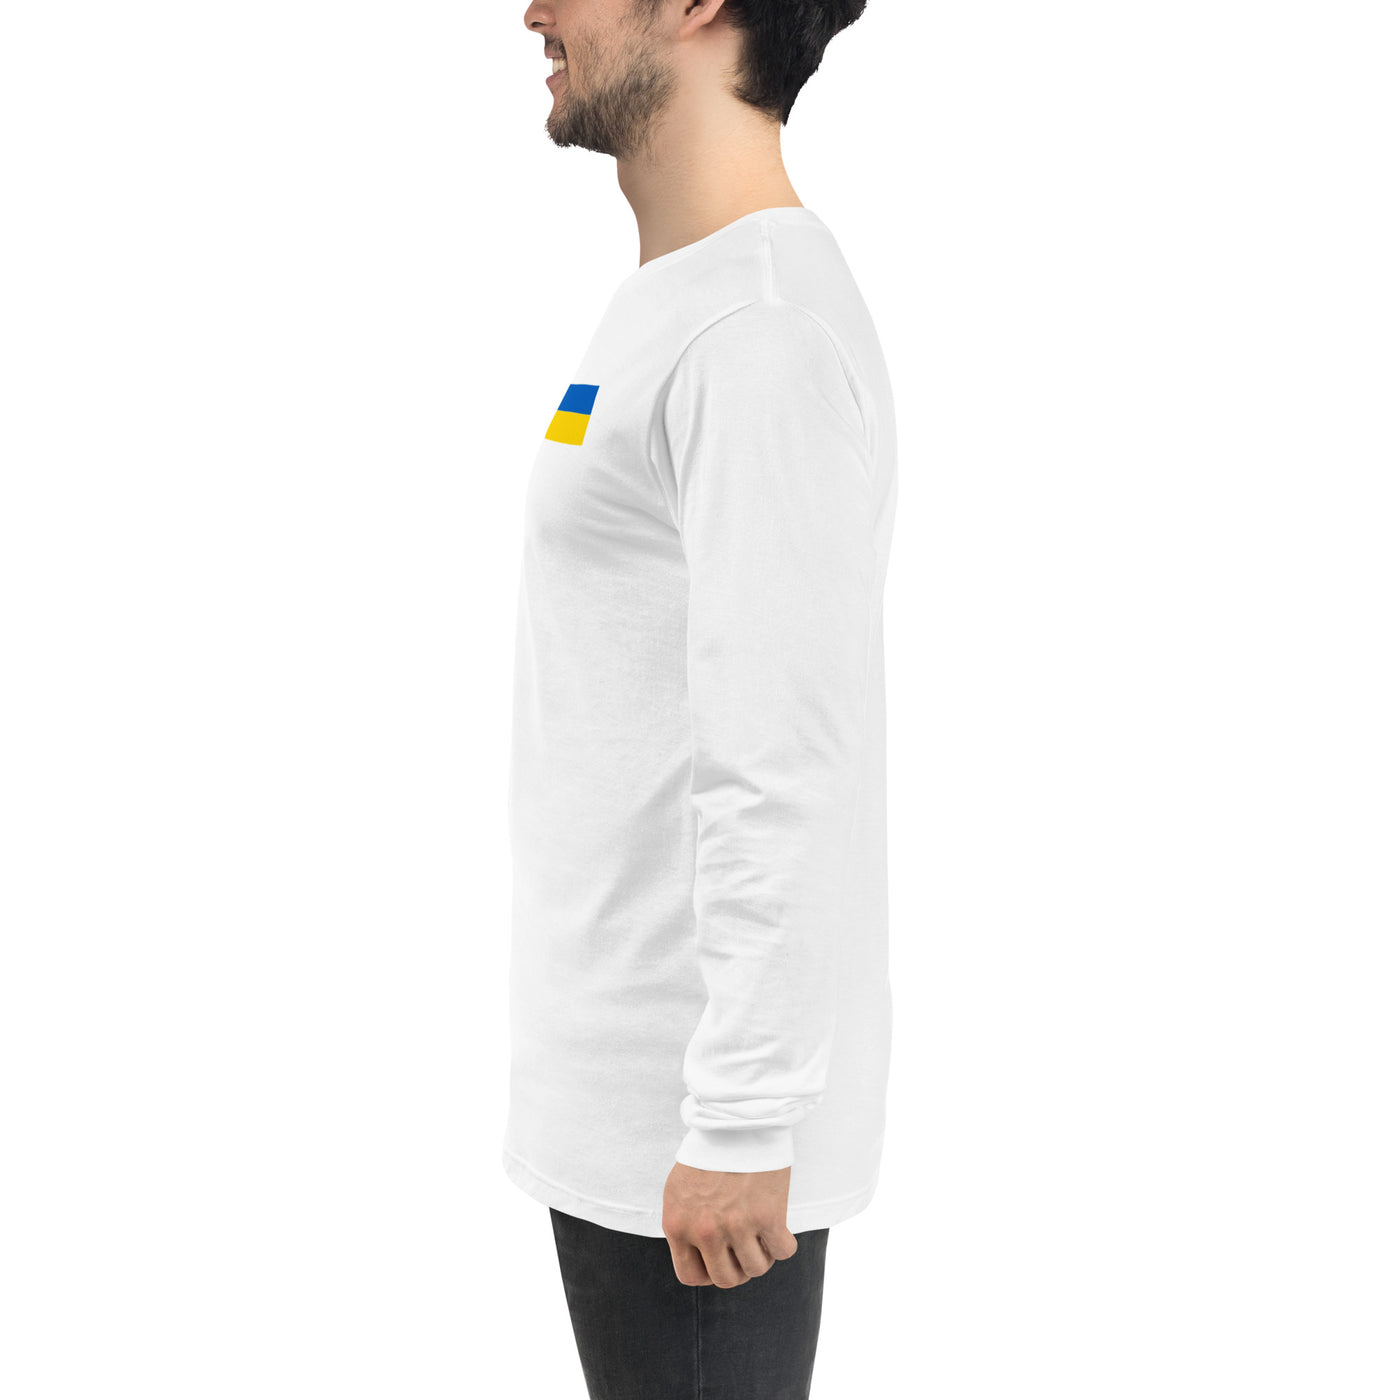 Ukrainian Flag 5 Long Sleeve Shirt Print